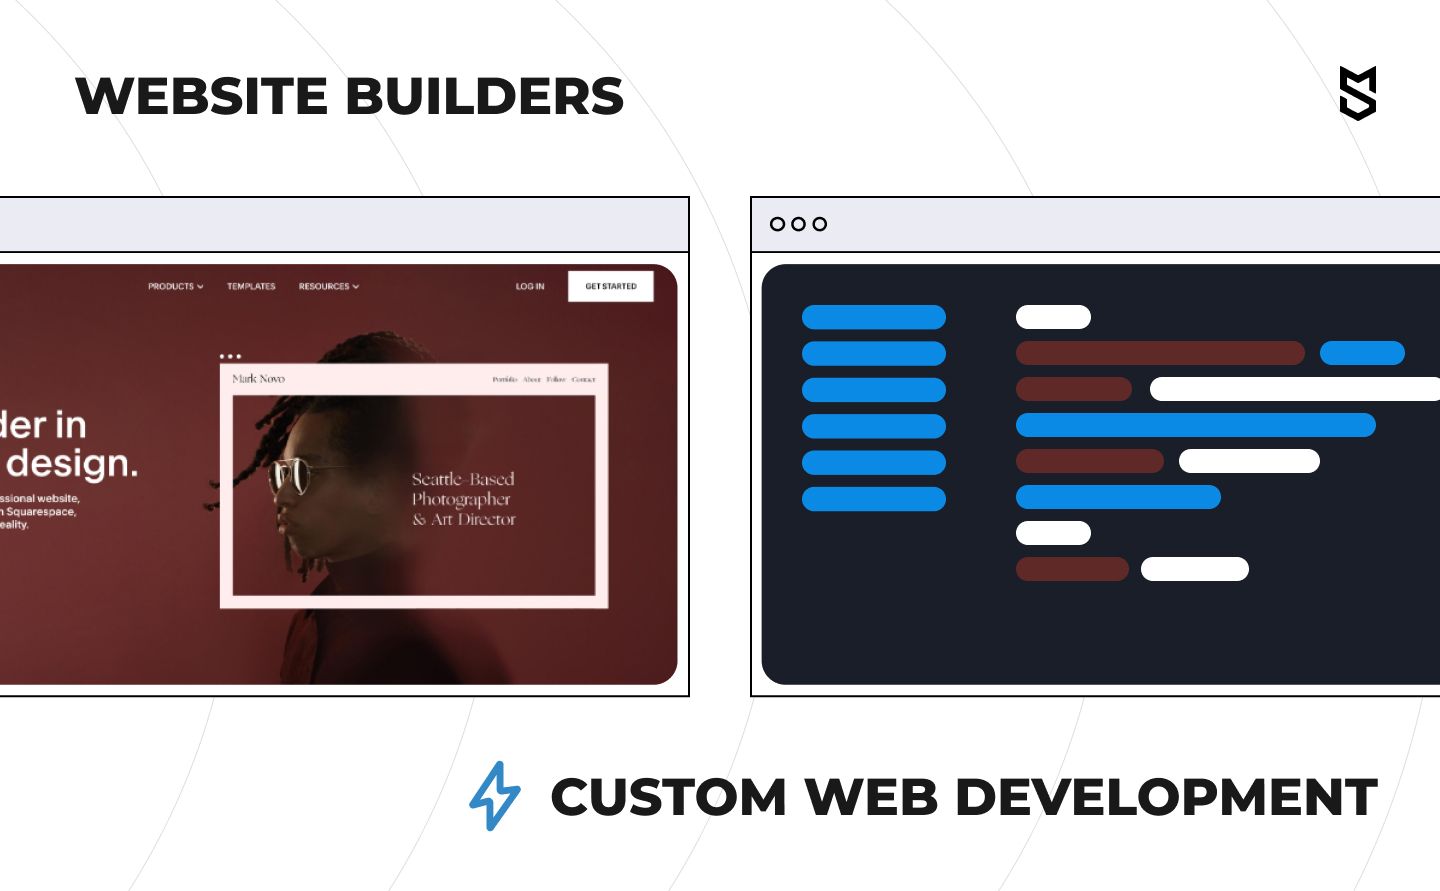 Website builders Vs. Custom web development